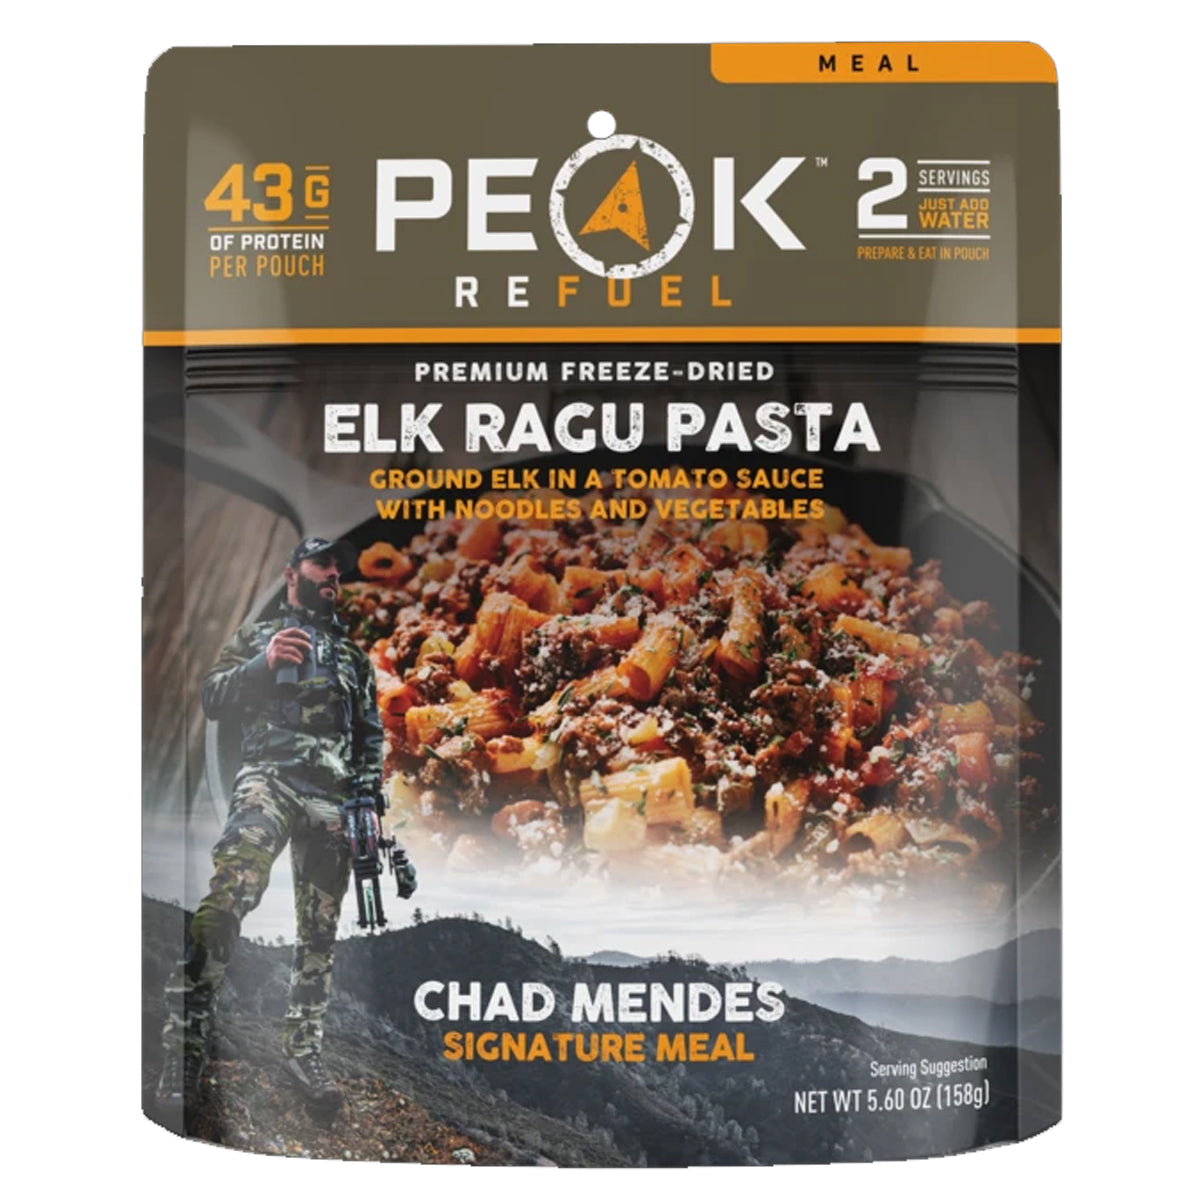 Peak Refuel Elk Ragu Pasta in  by GOHUNT | Peak Refuel - GOHUNT Shop